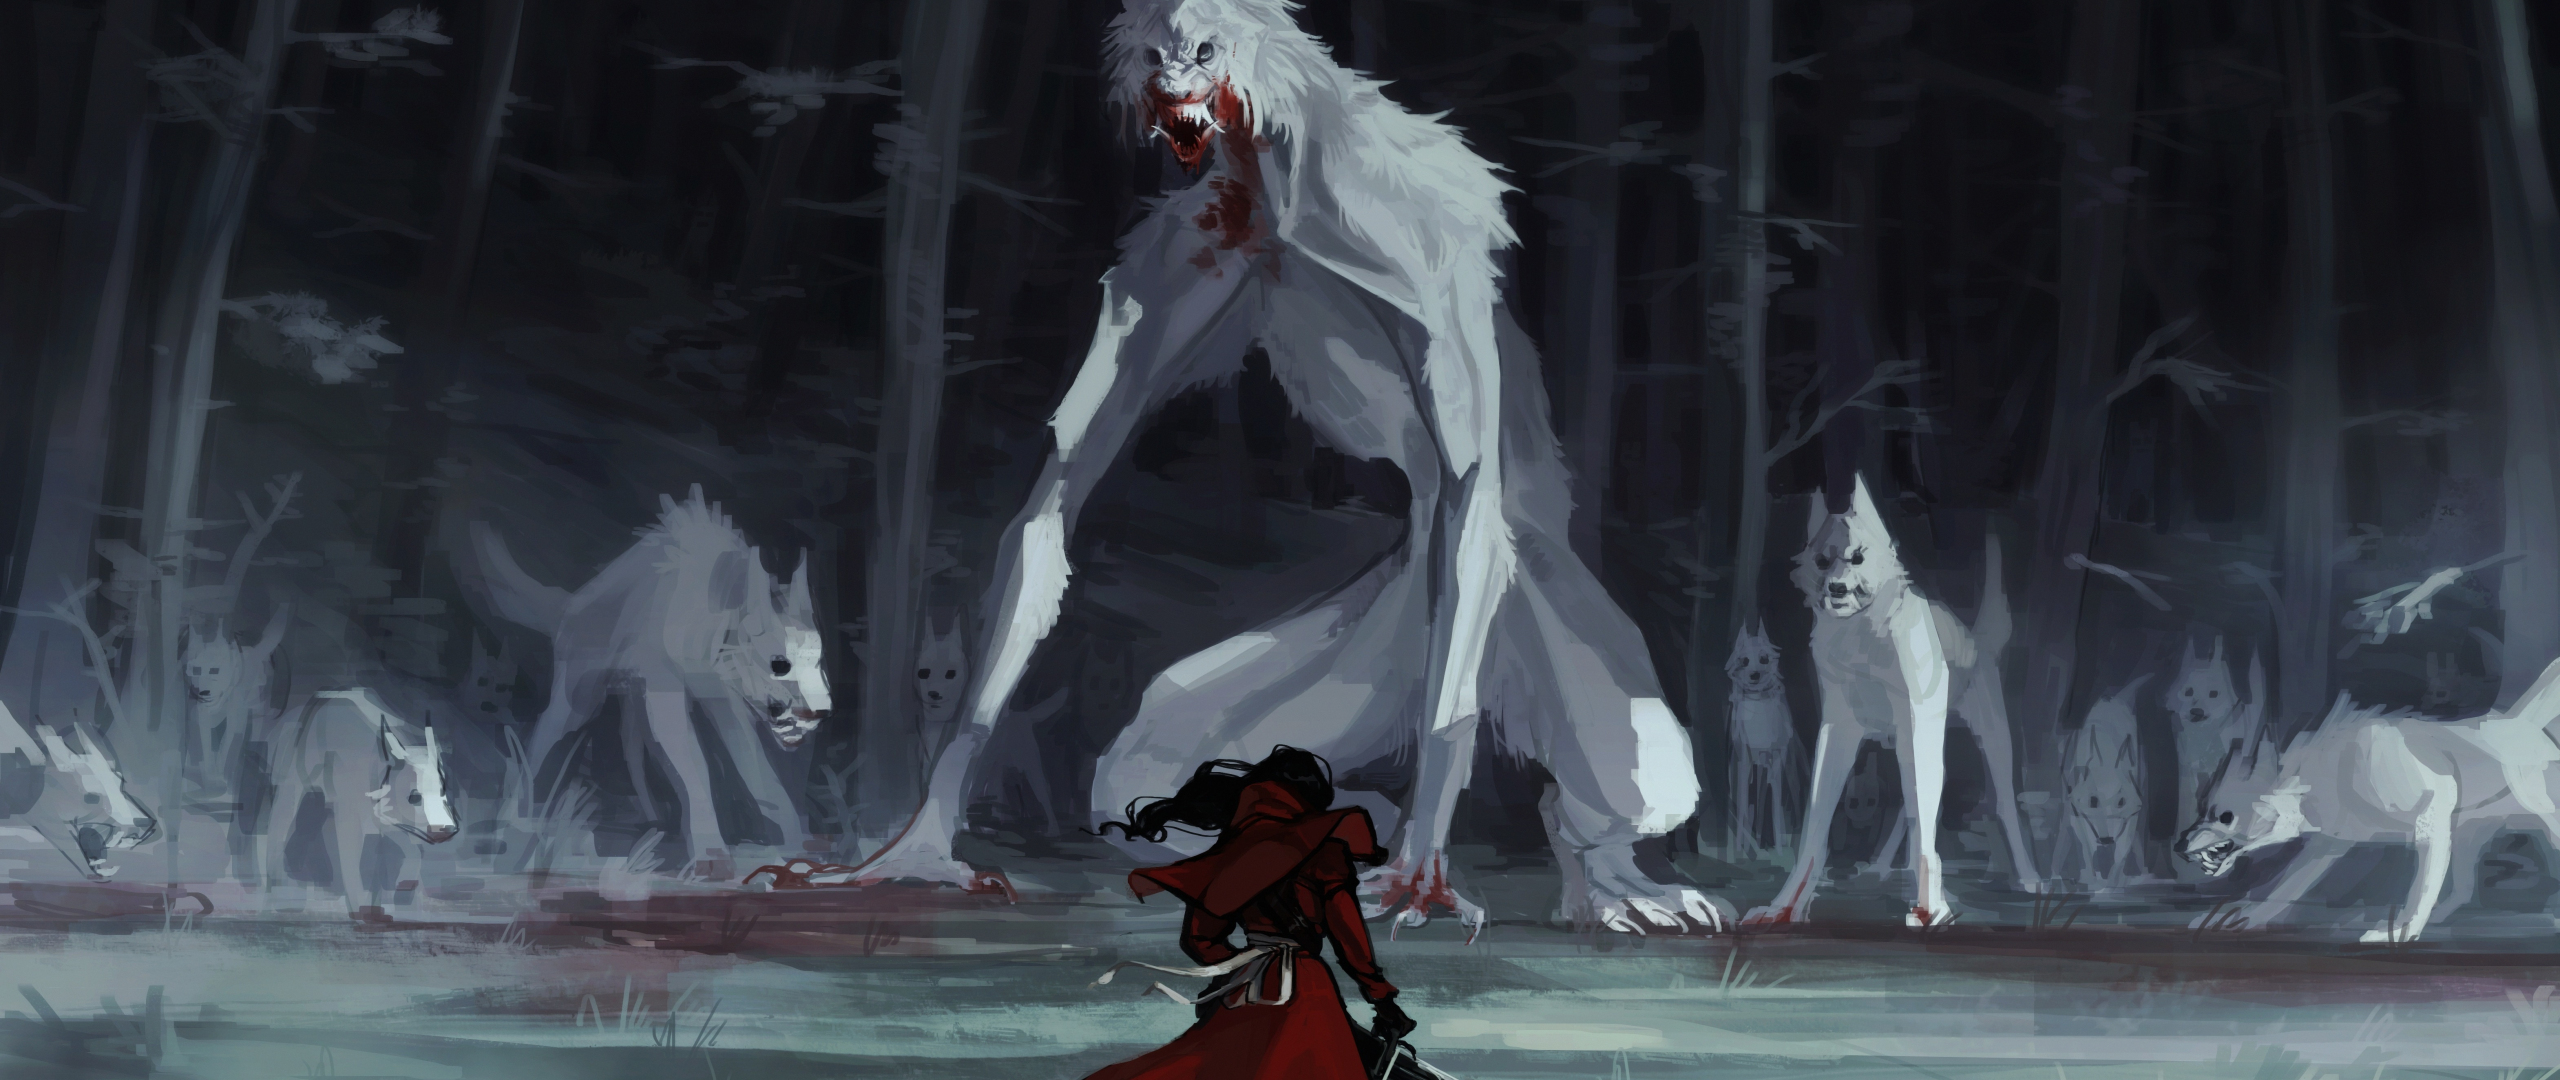 Red riding hood, wolf, fantasy, art, 2560x1080 wallpaper